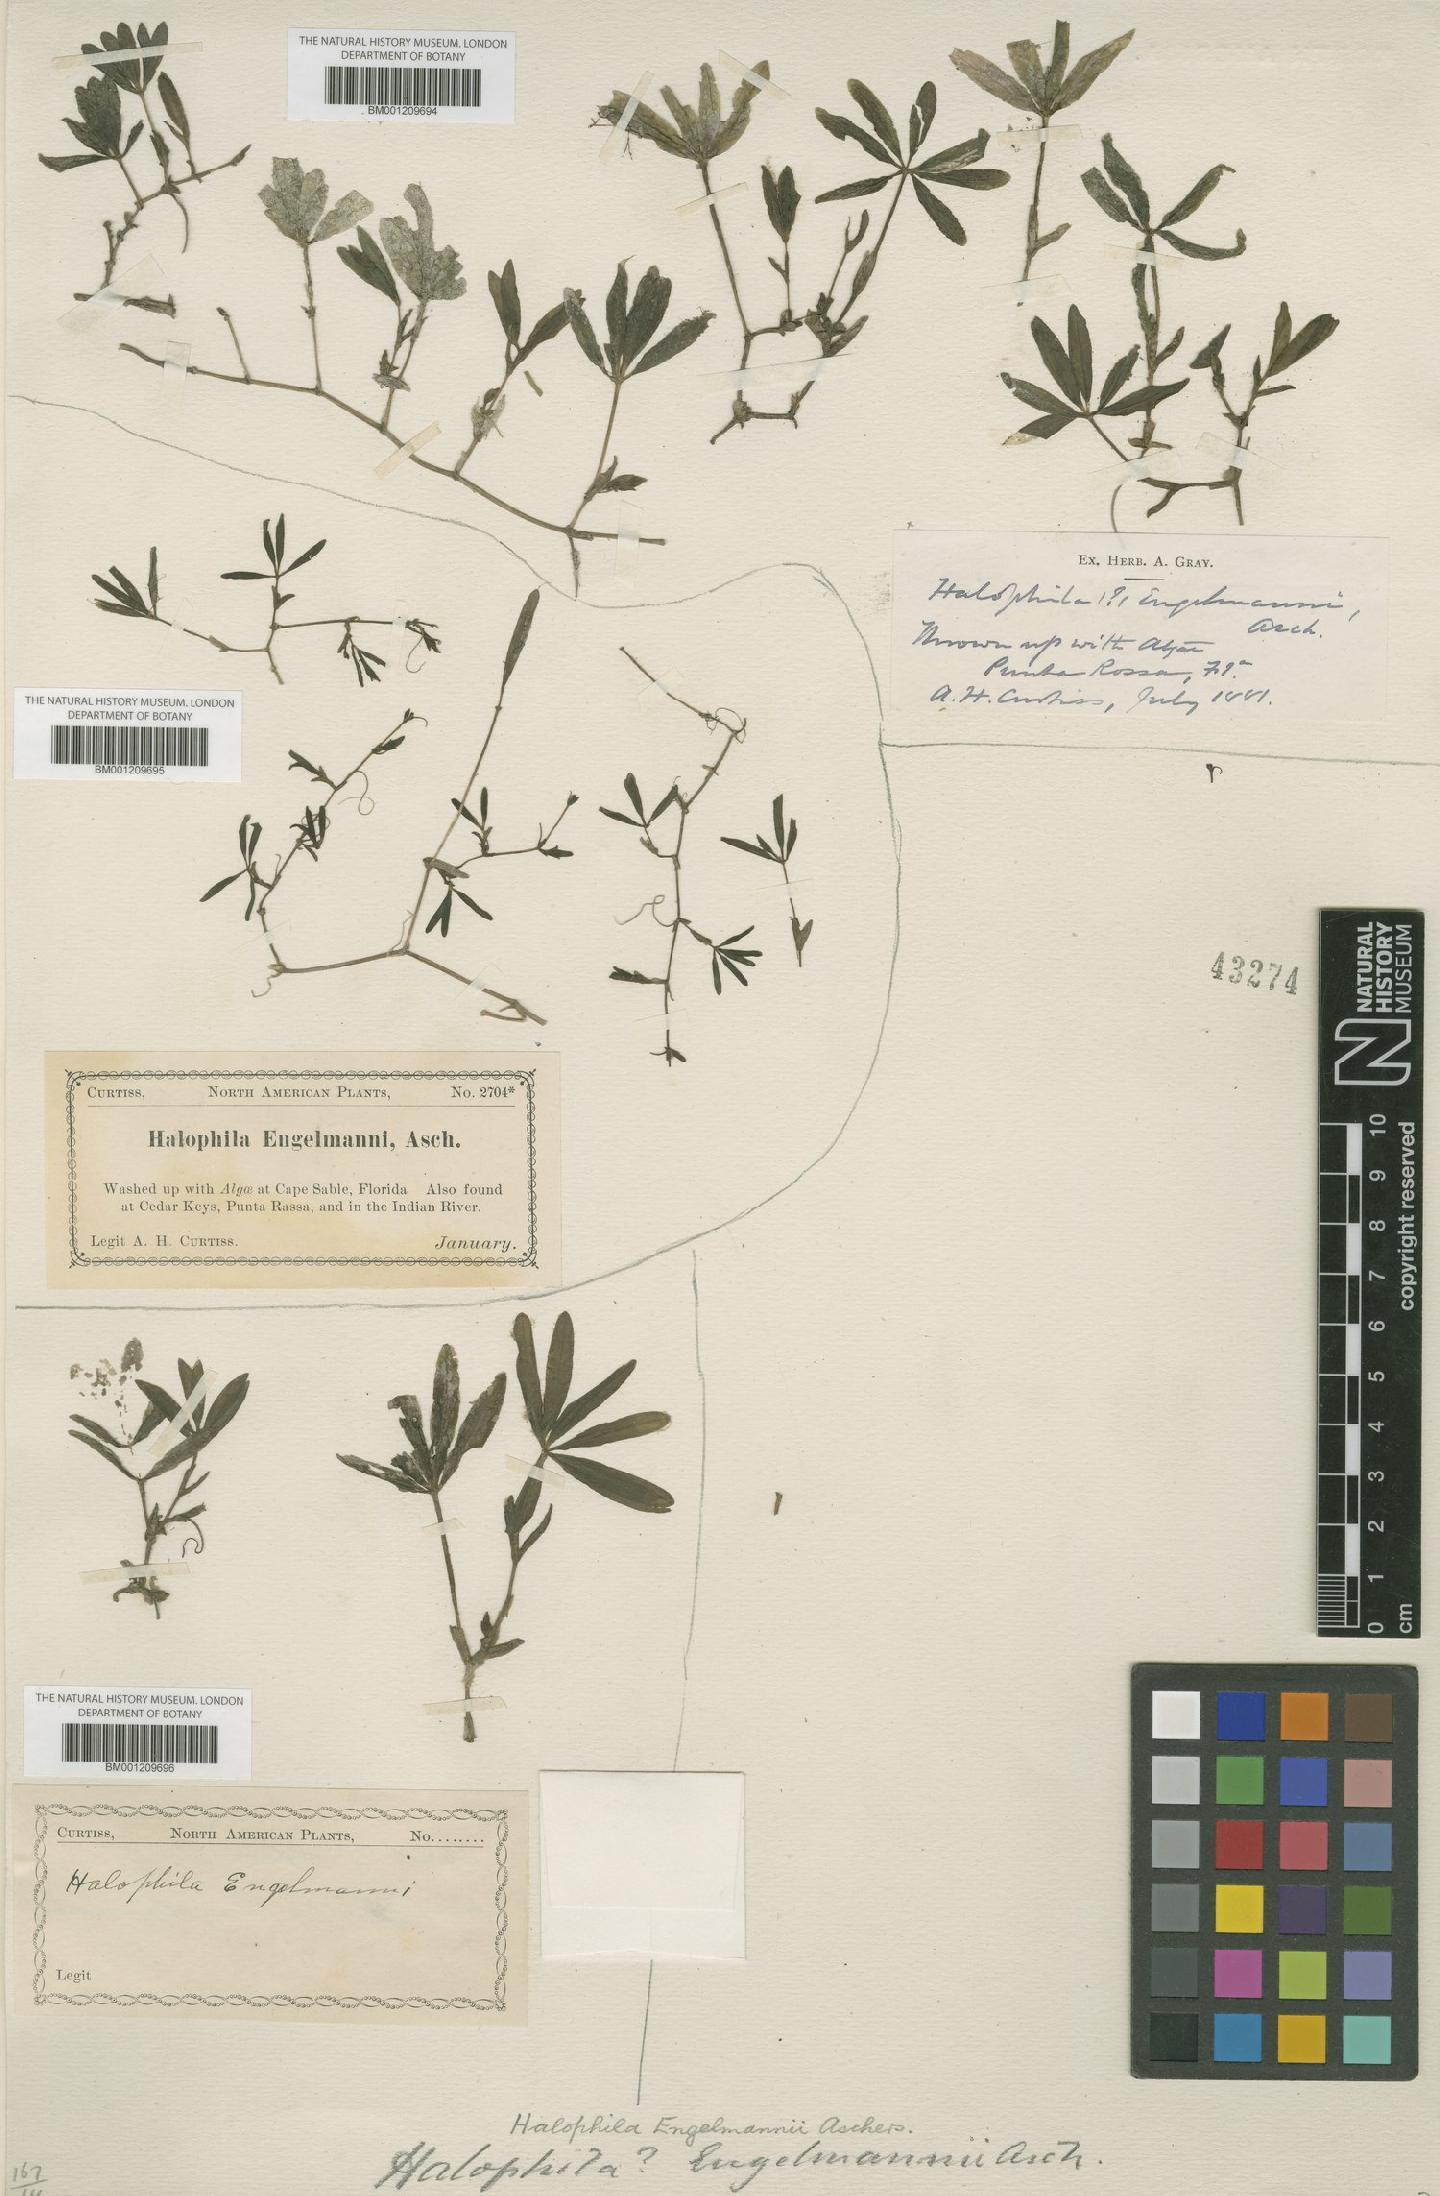 To NHMUK collection (Halophila engelmannii Asch.; NHMUK:ecatalogue:8067442)